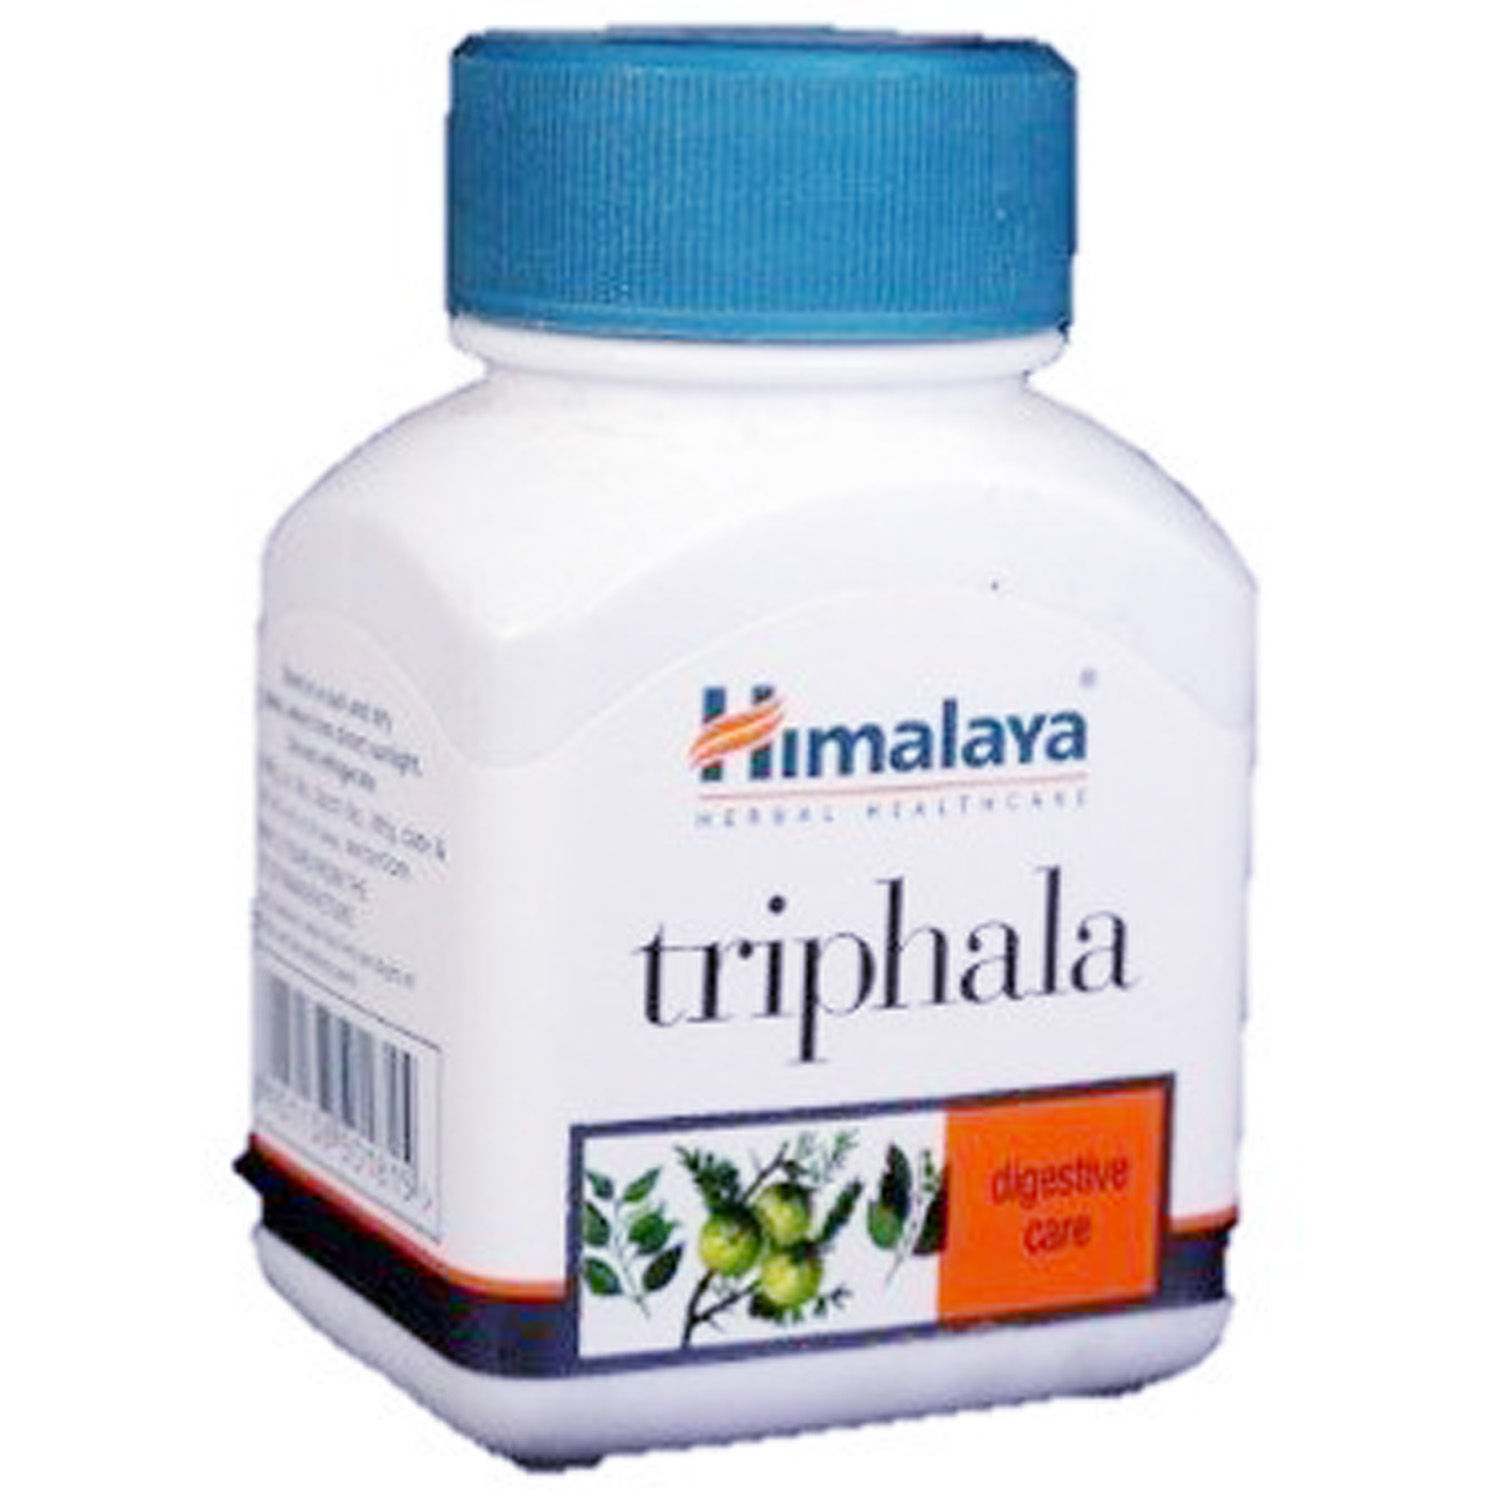 Buy Himalaya Triphala, 60 Capsules Online